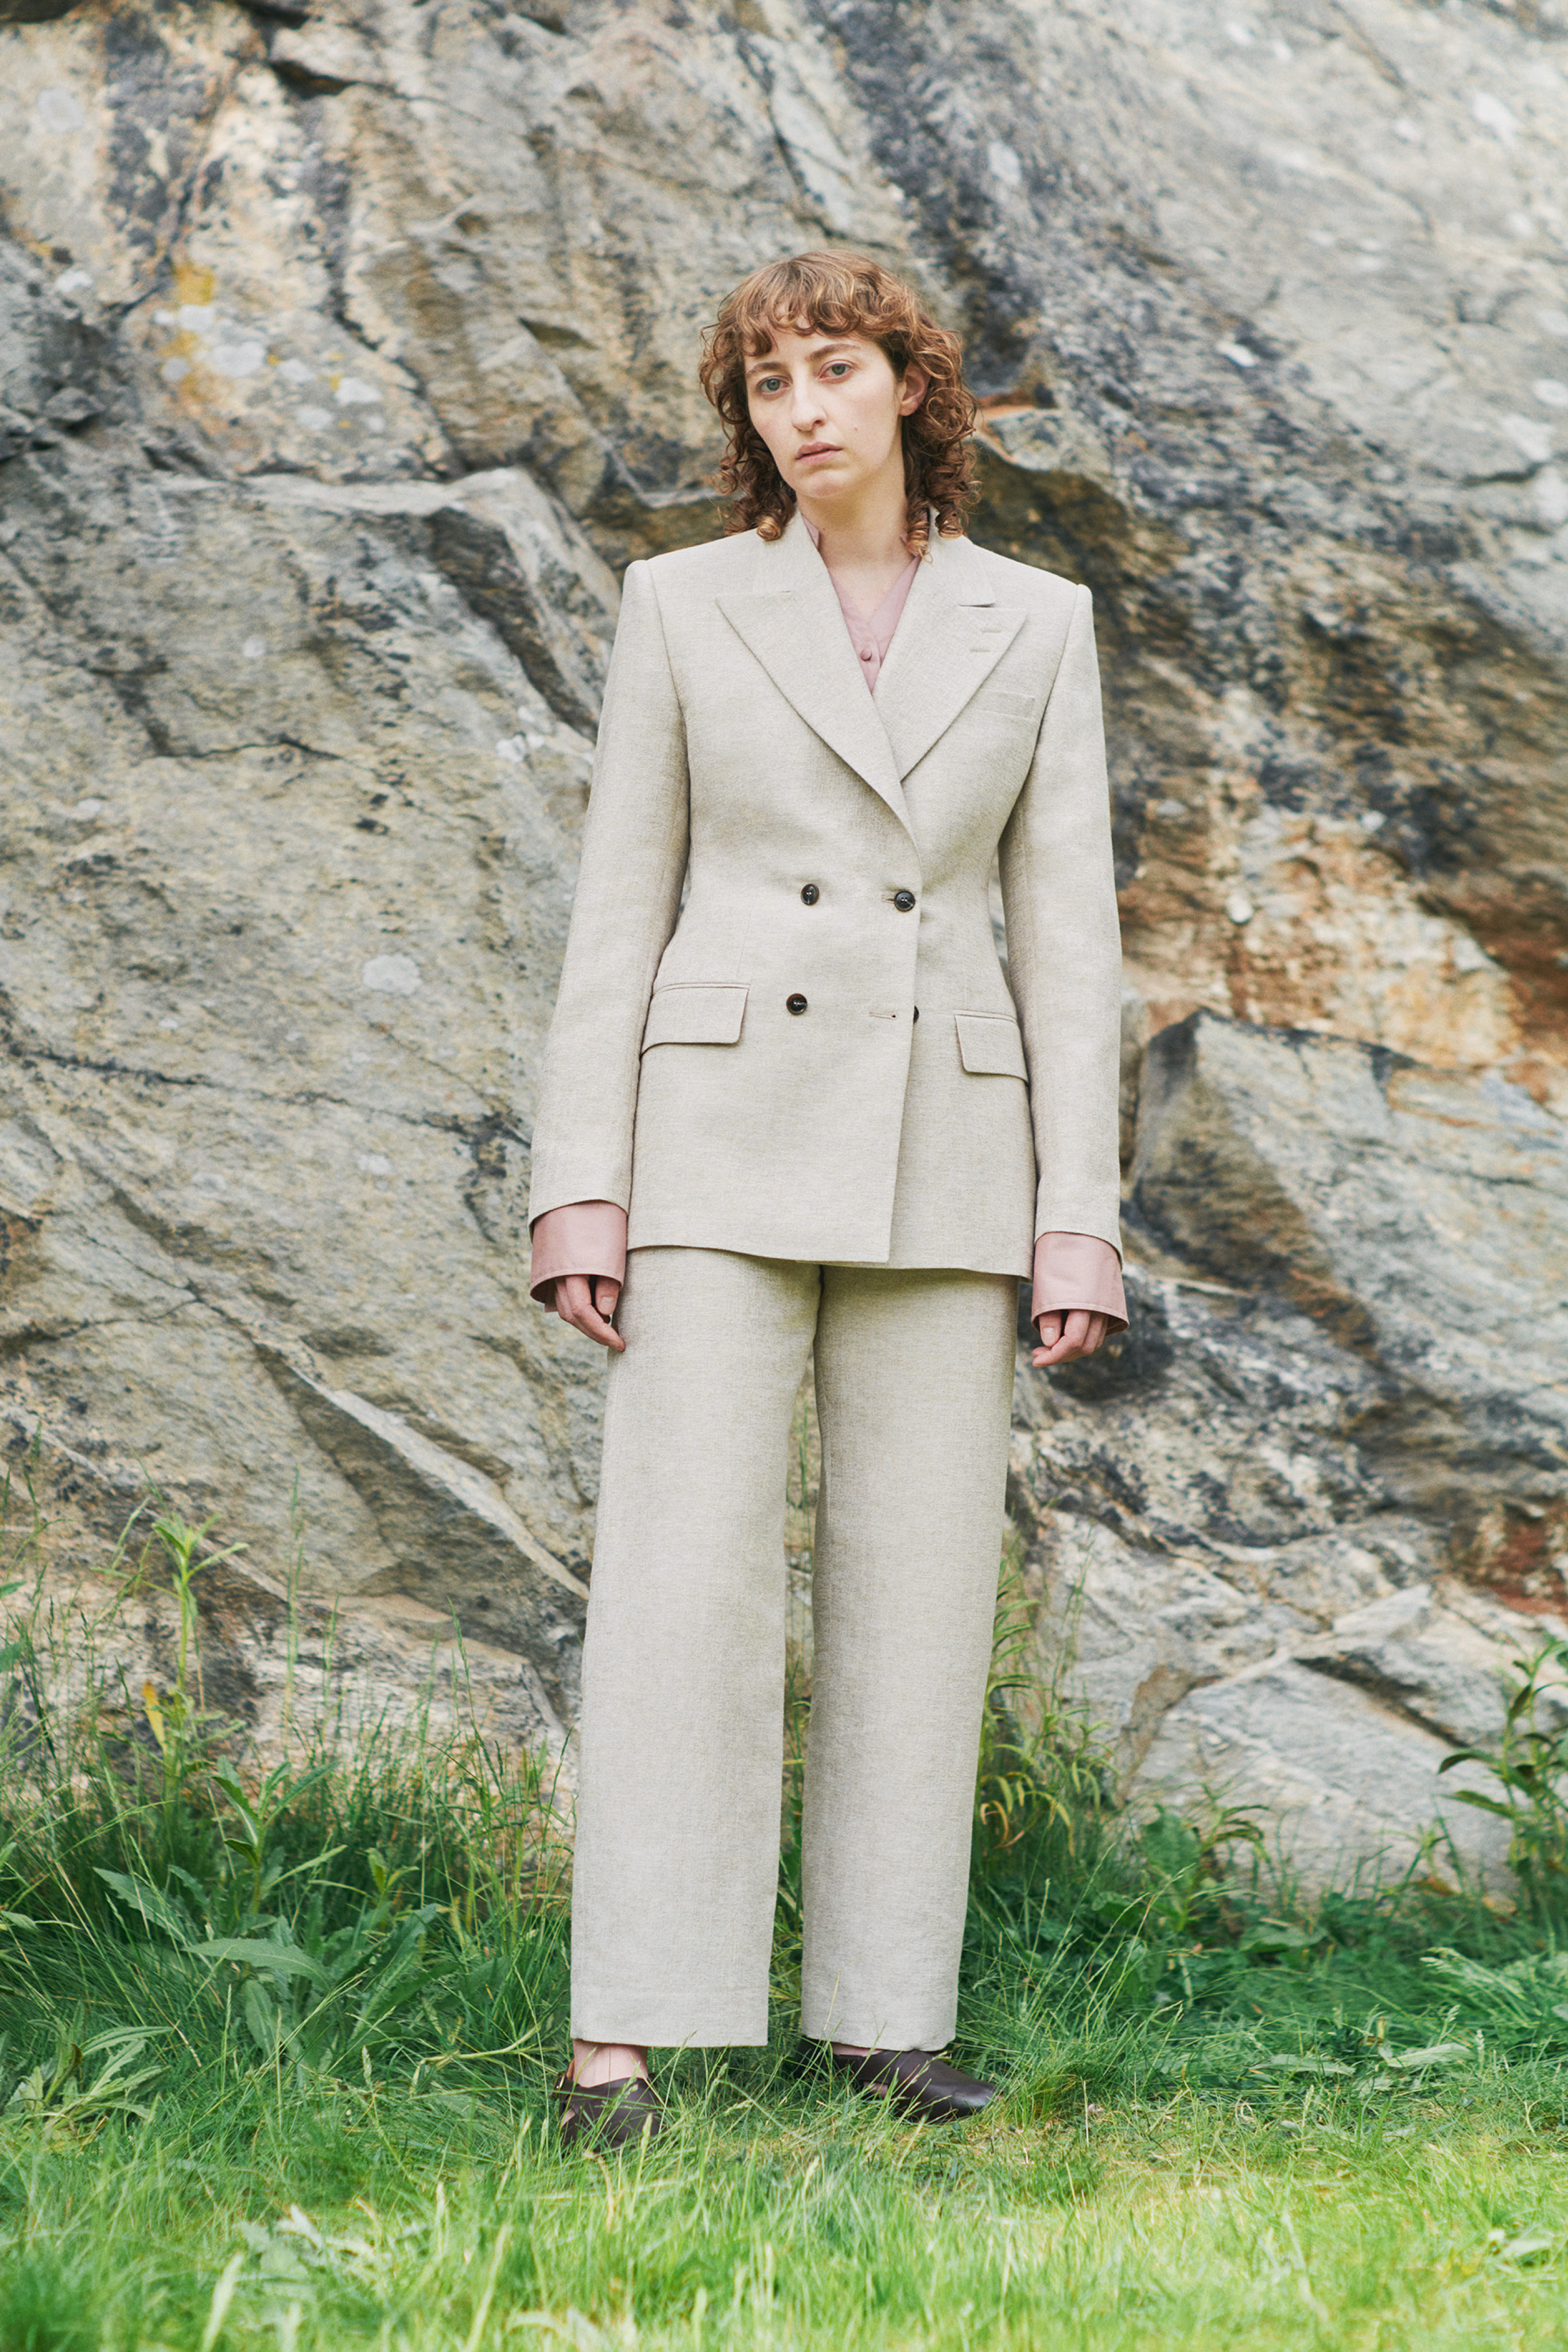 Women model wearing a linen suit from Tiger of Sweden